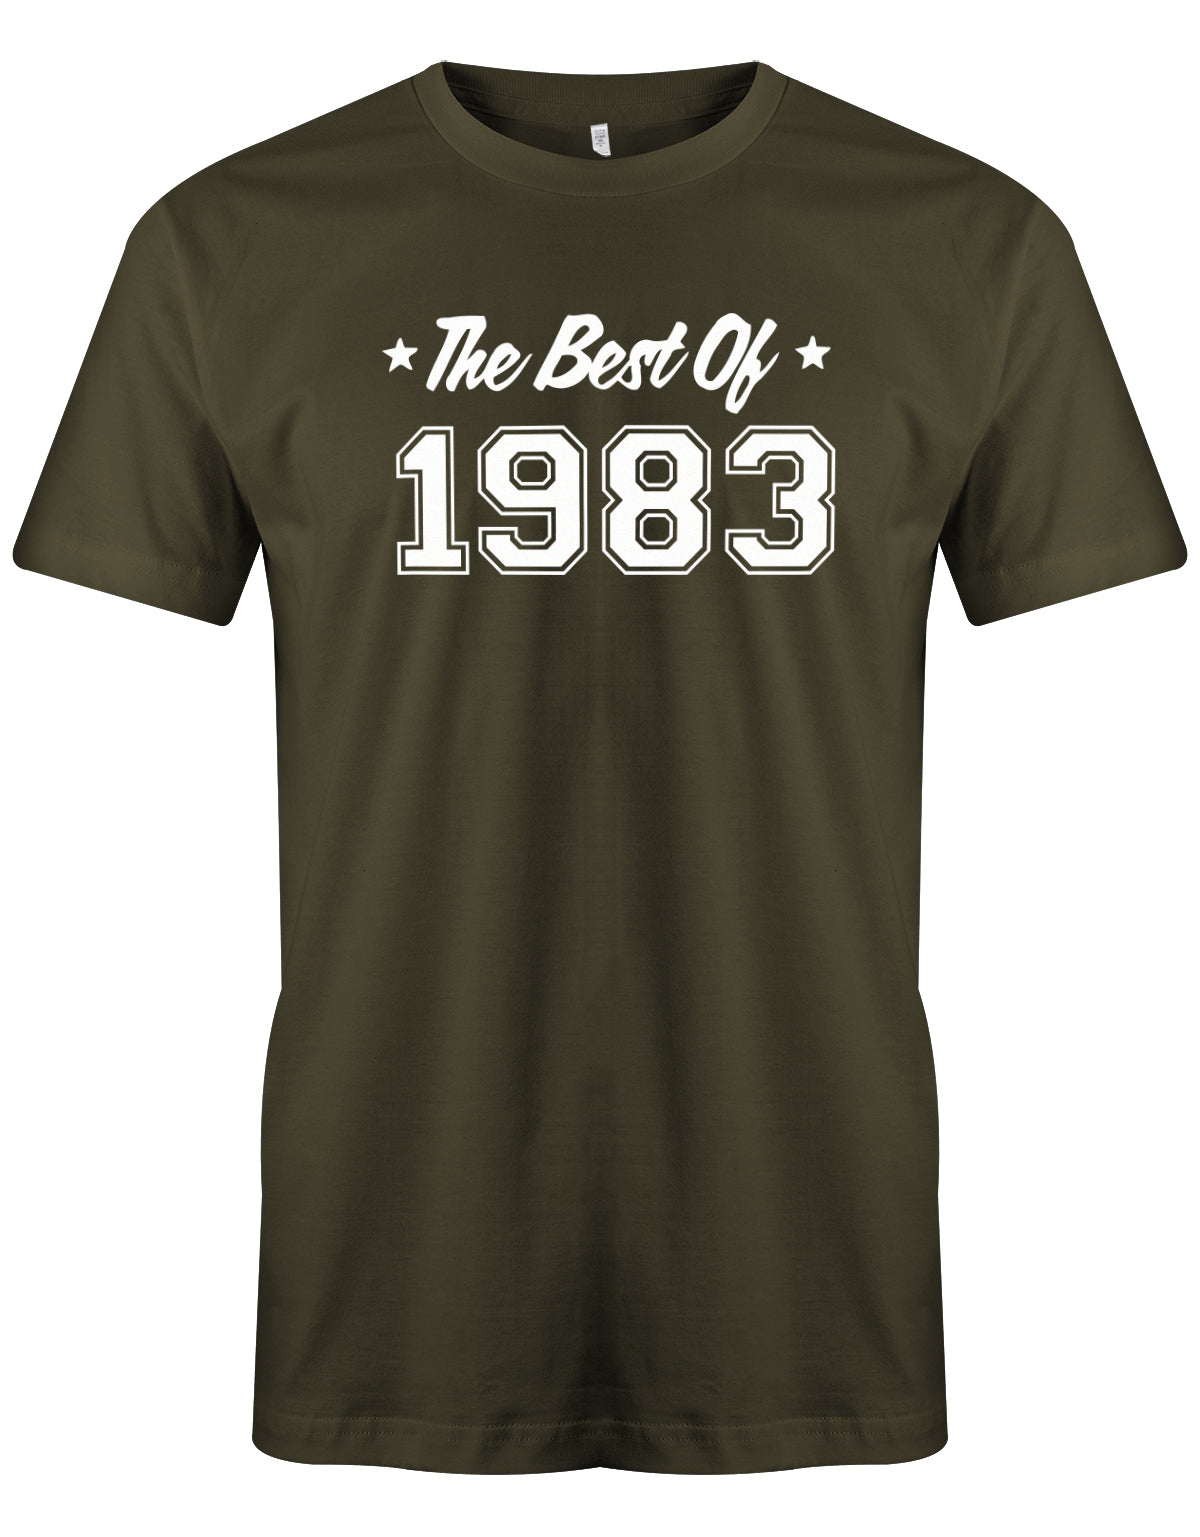 The best of 1983 - T-Shirt 40 Geburtstag Männer - Jahrgang 1983 TShirt  Army